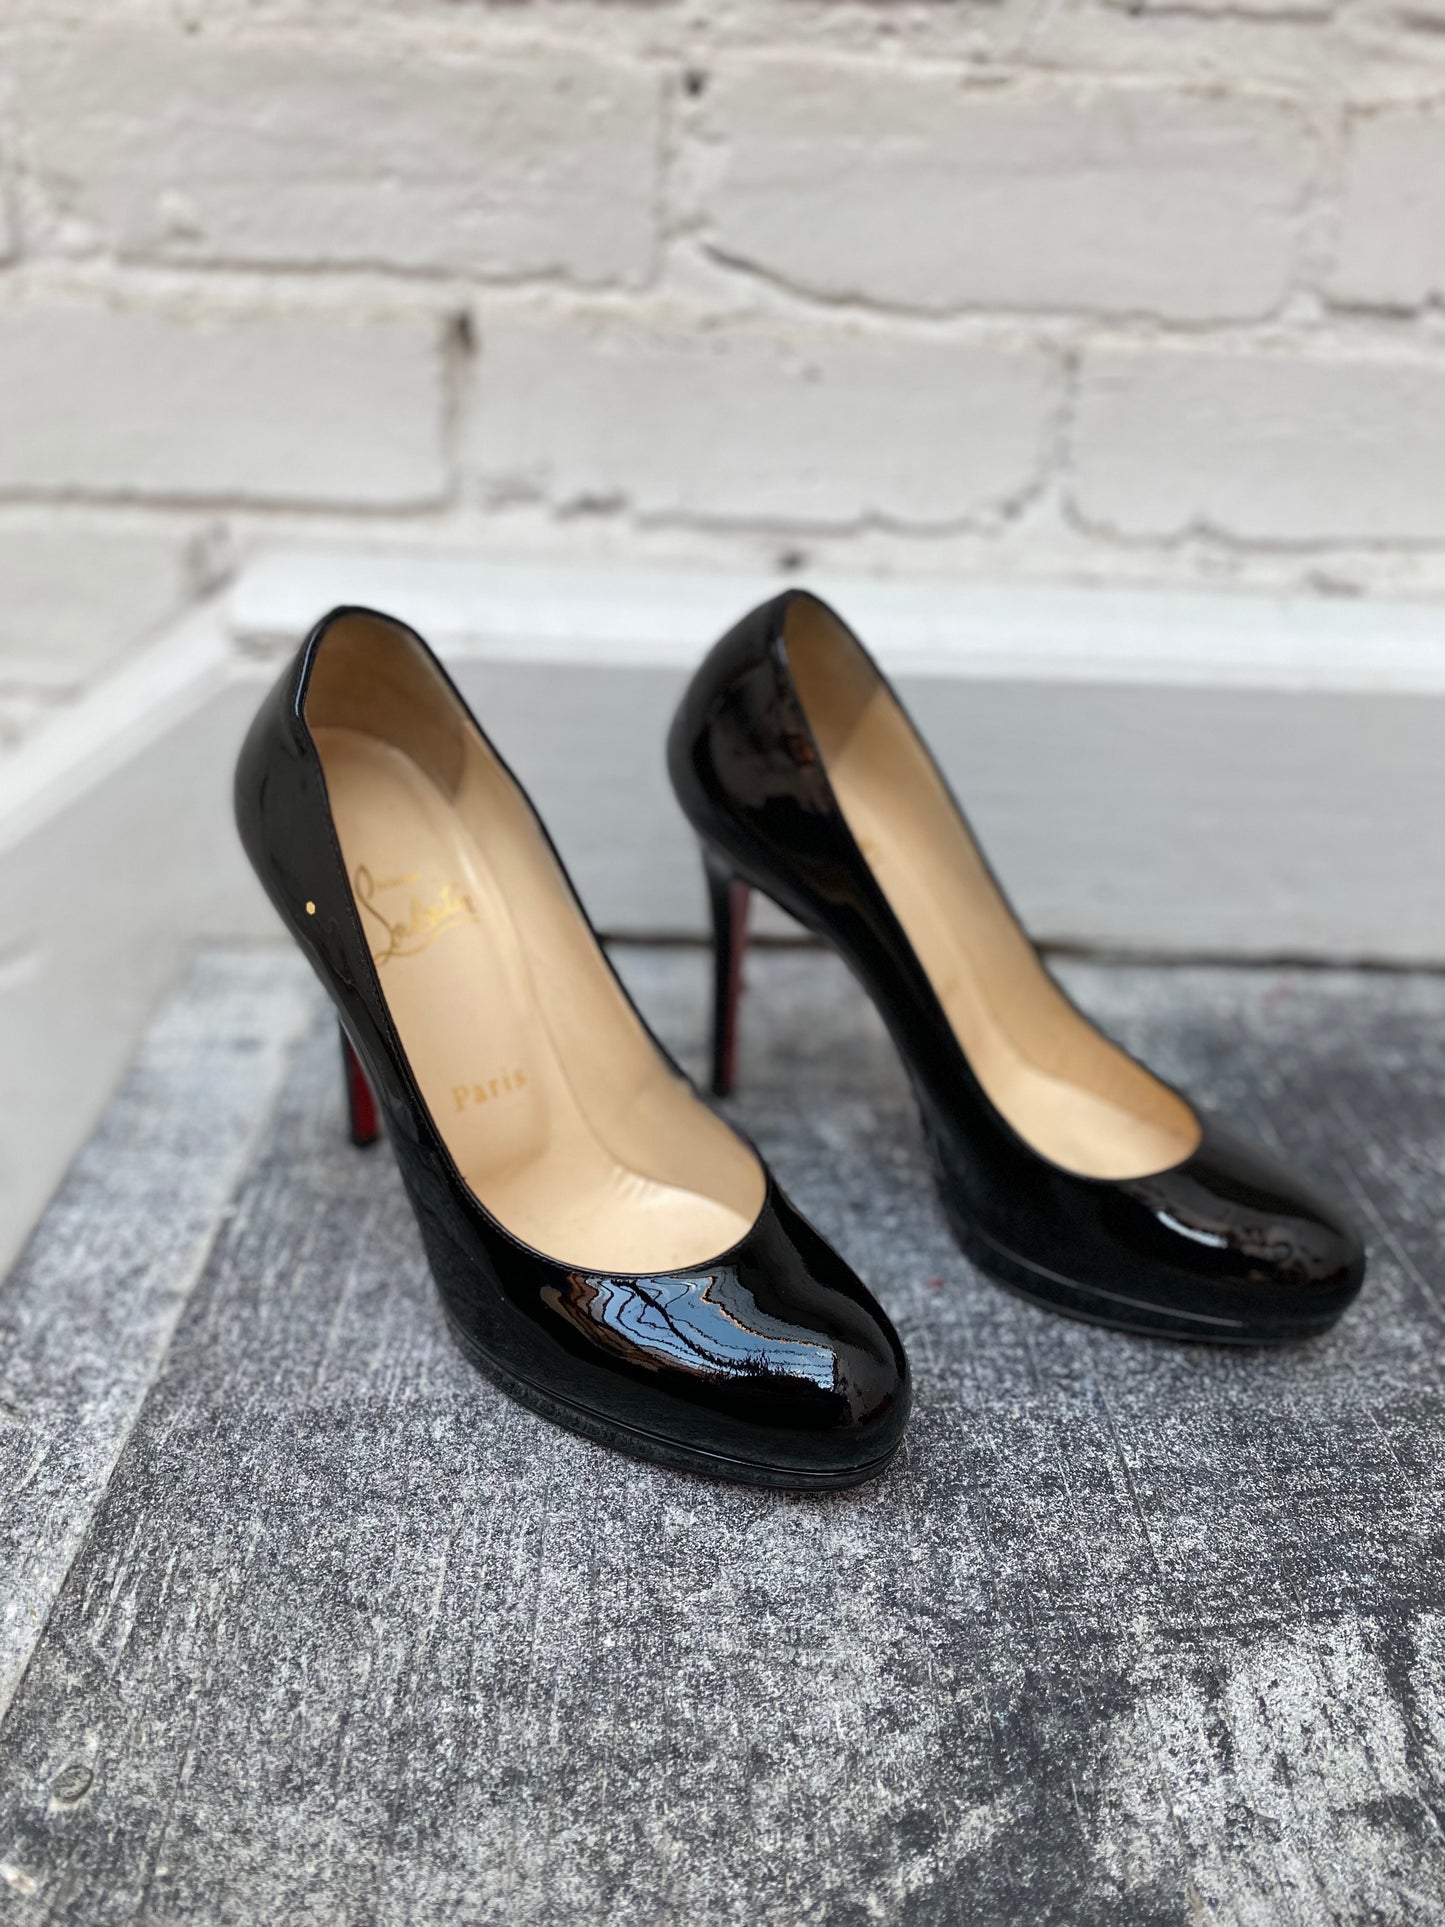 Christian Louboutin black patent leather heel